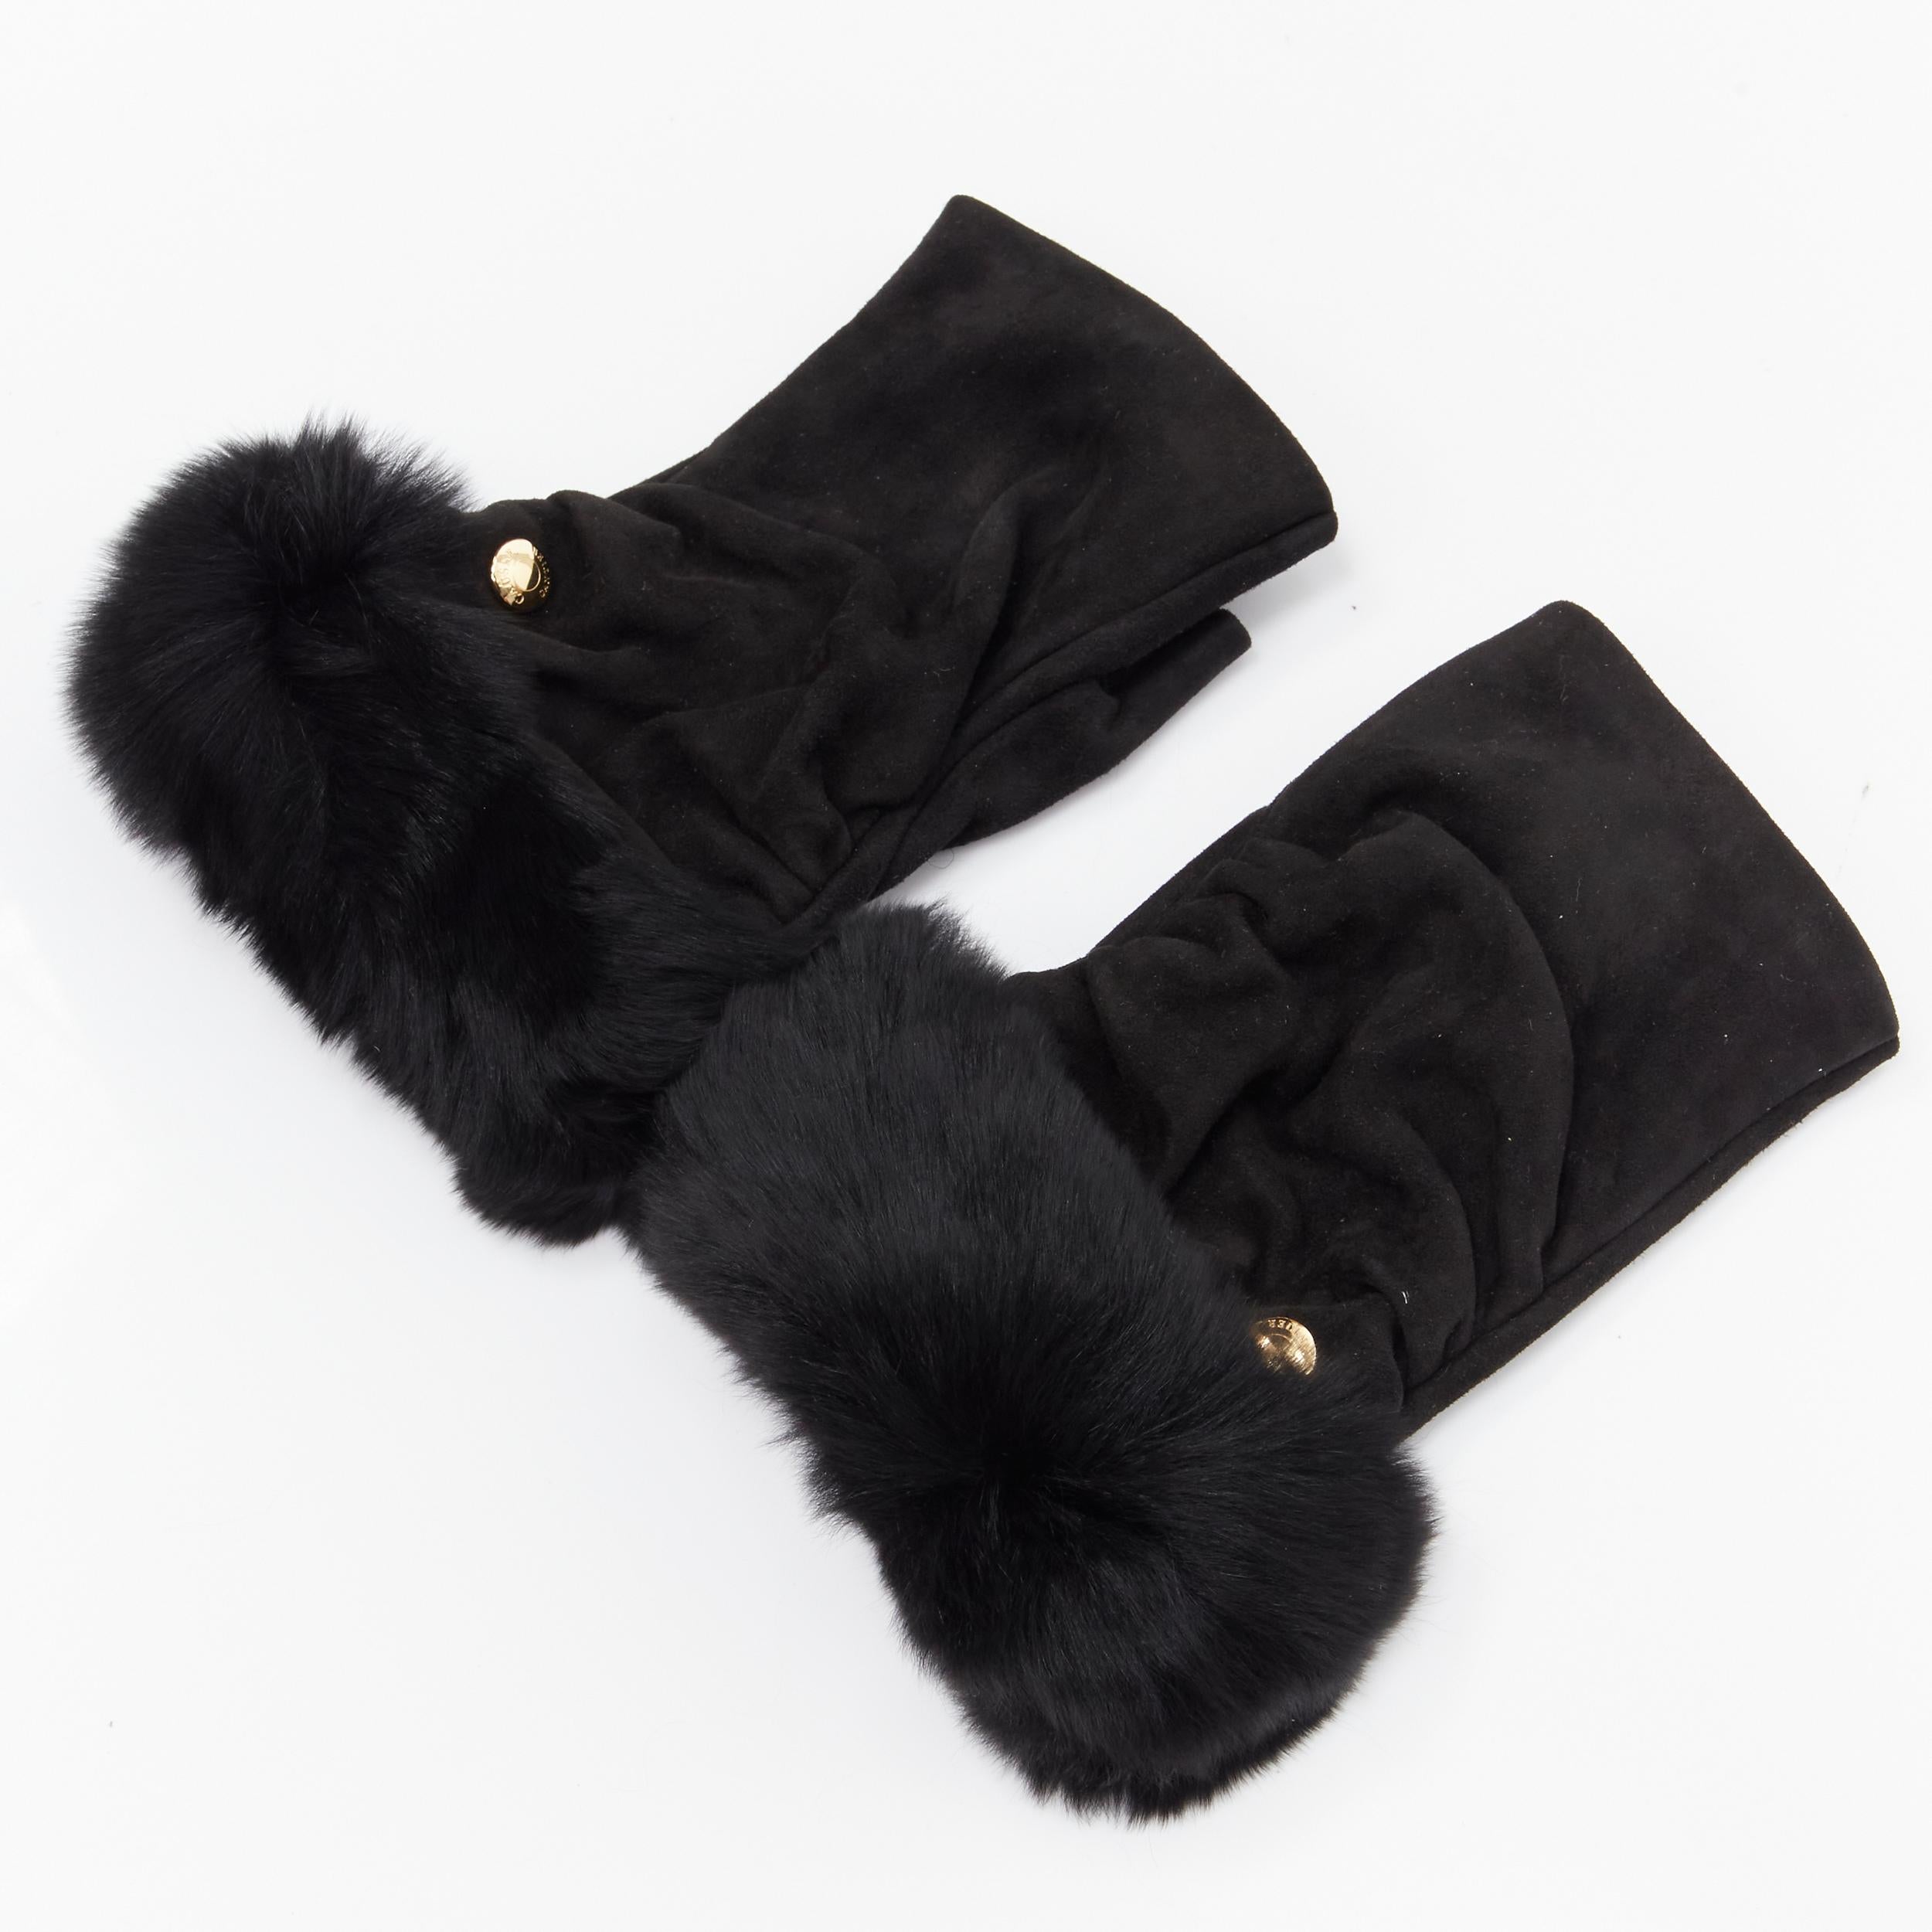 Black CAUSSE Gantier black soft ruched suede leather chinchilla fur trimmed fingerless For Sale